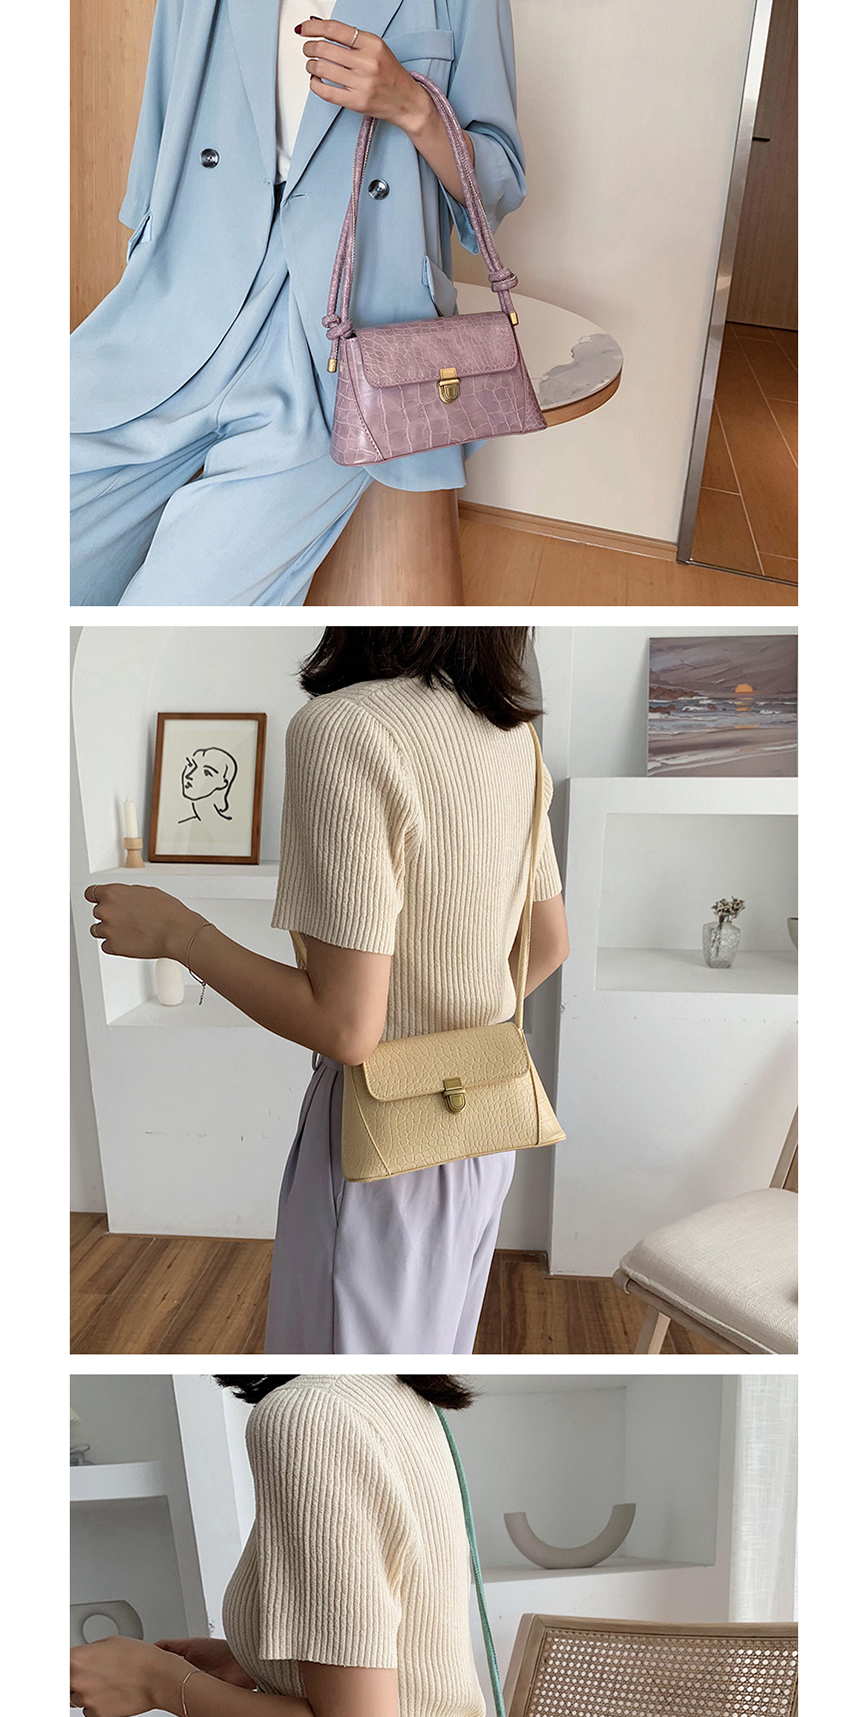 Fashion White Crocodile-lock Shoulder Bag,Messenger bags